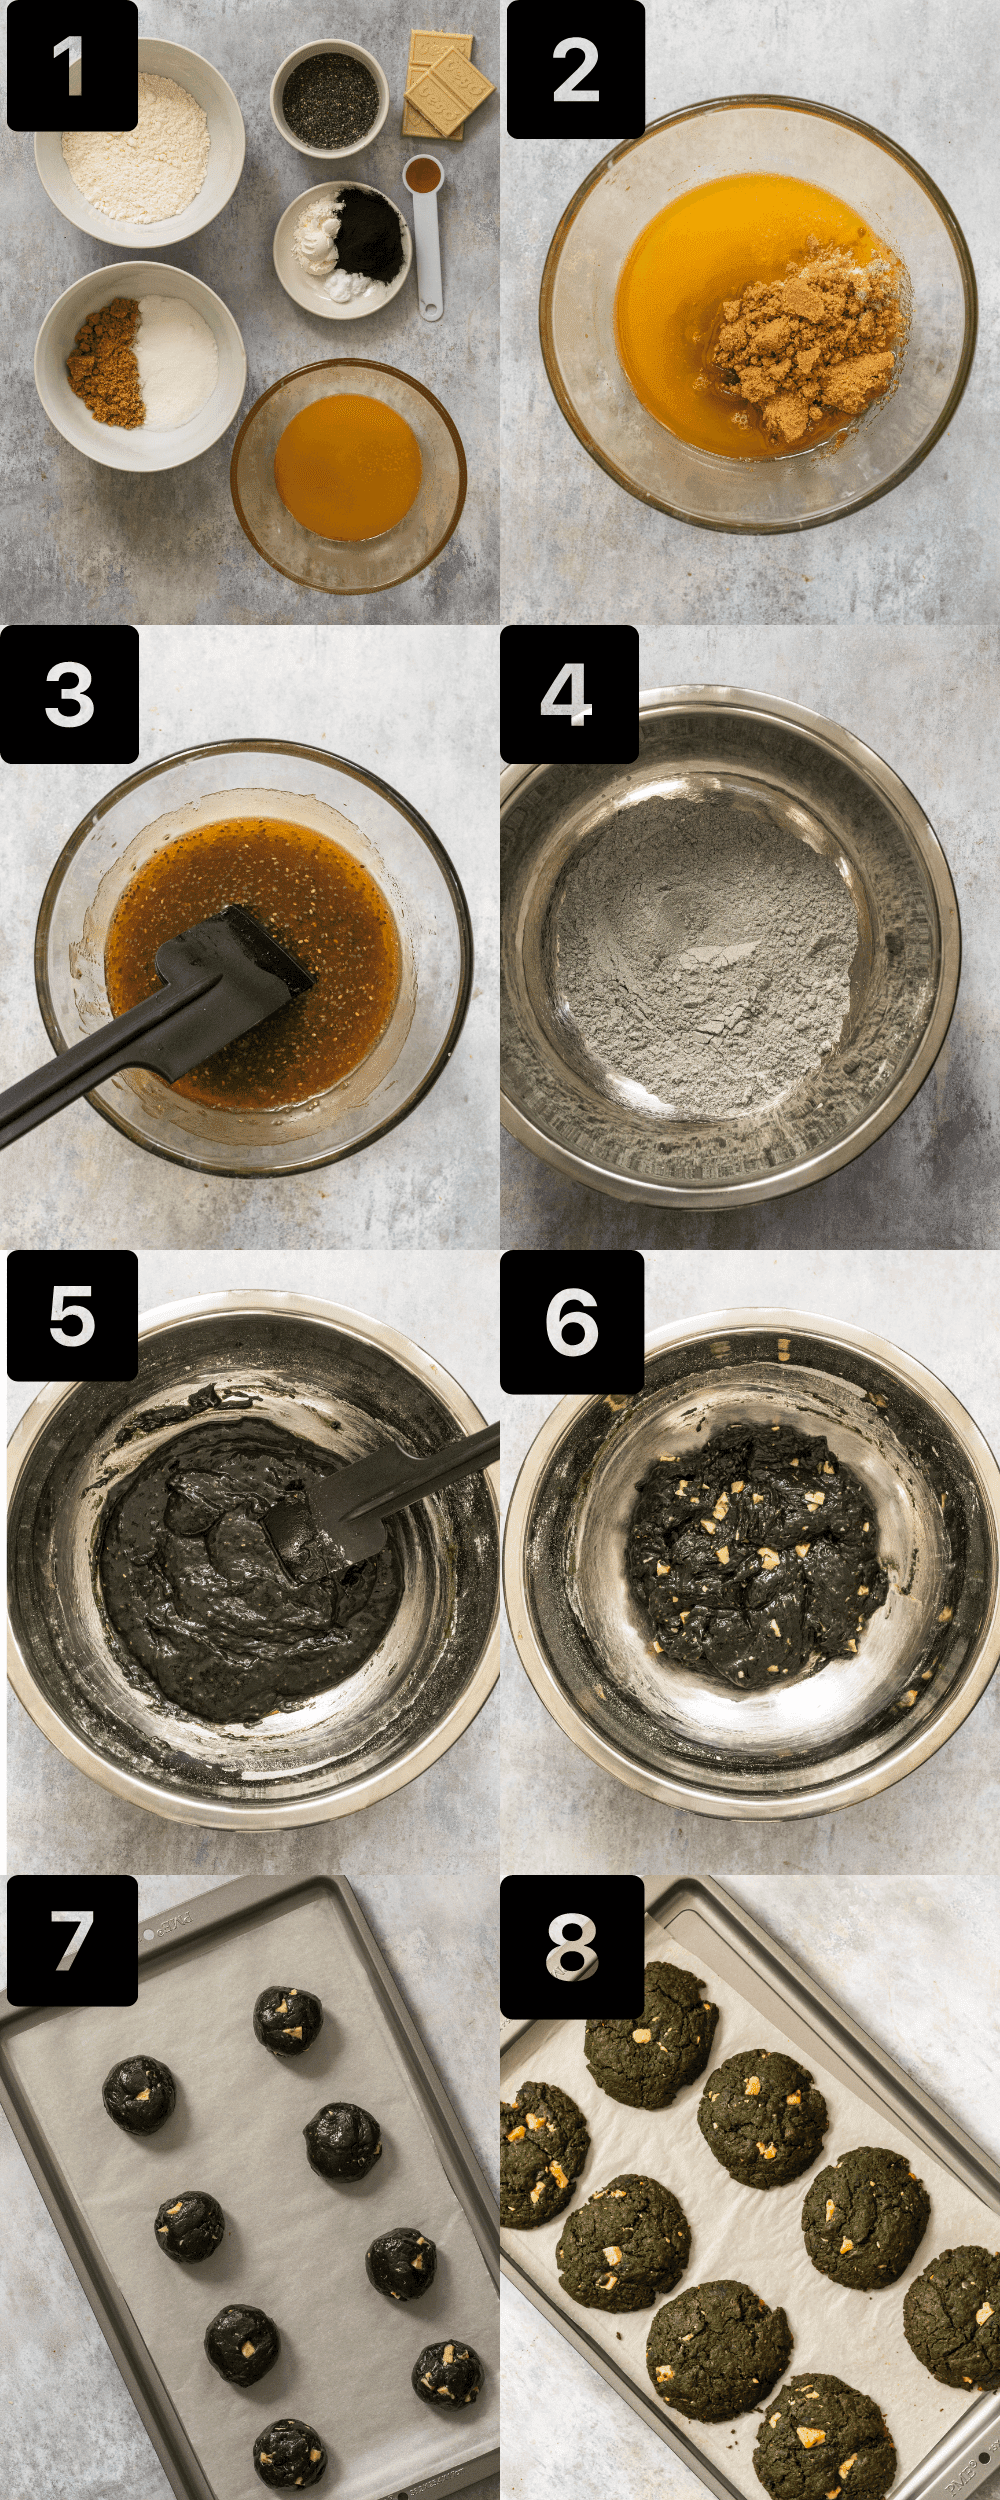 Process shots of making spirulina cookies.